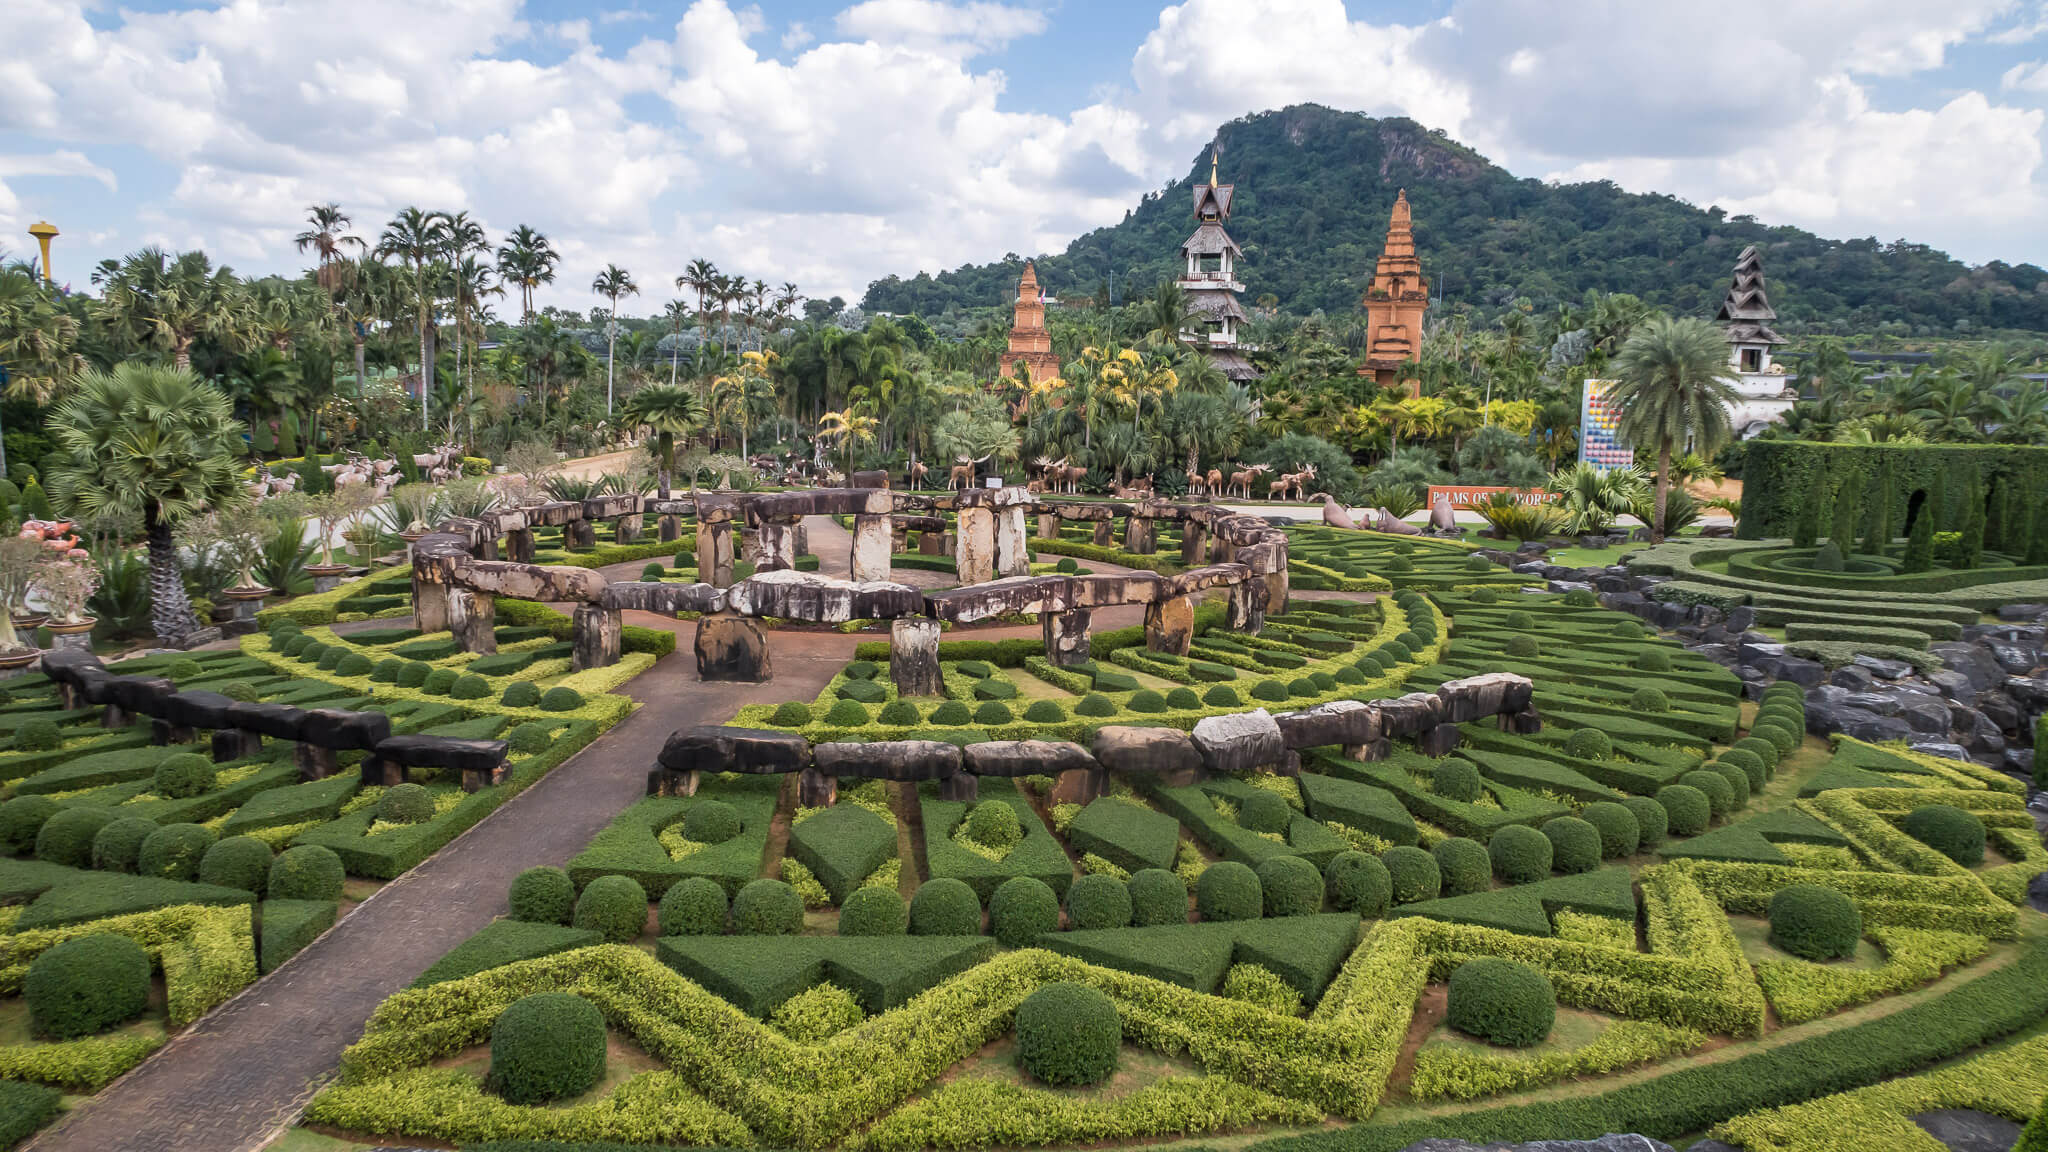 Тропический парк нонг нуч в паттайе, таиланд: фото, видео, отзывы - 2023